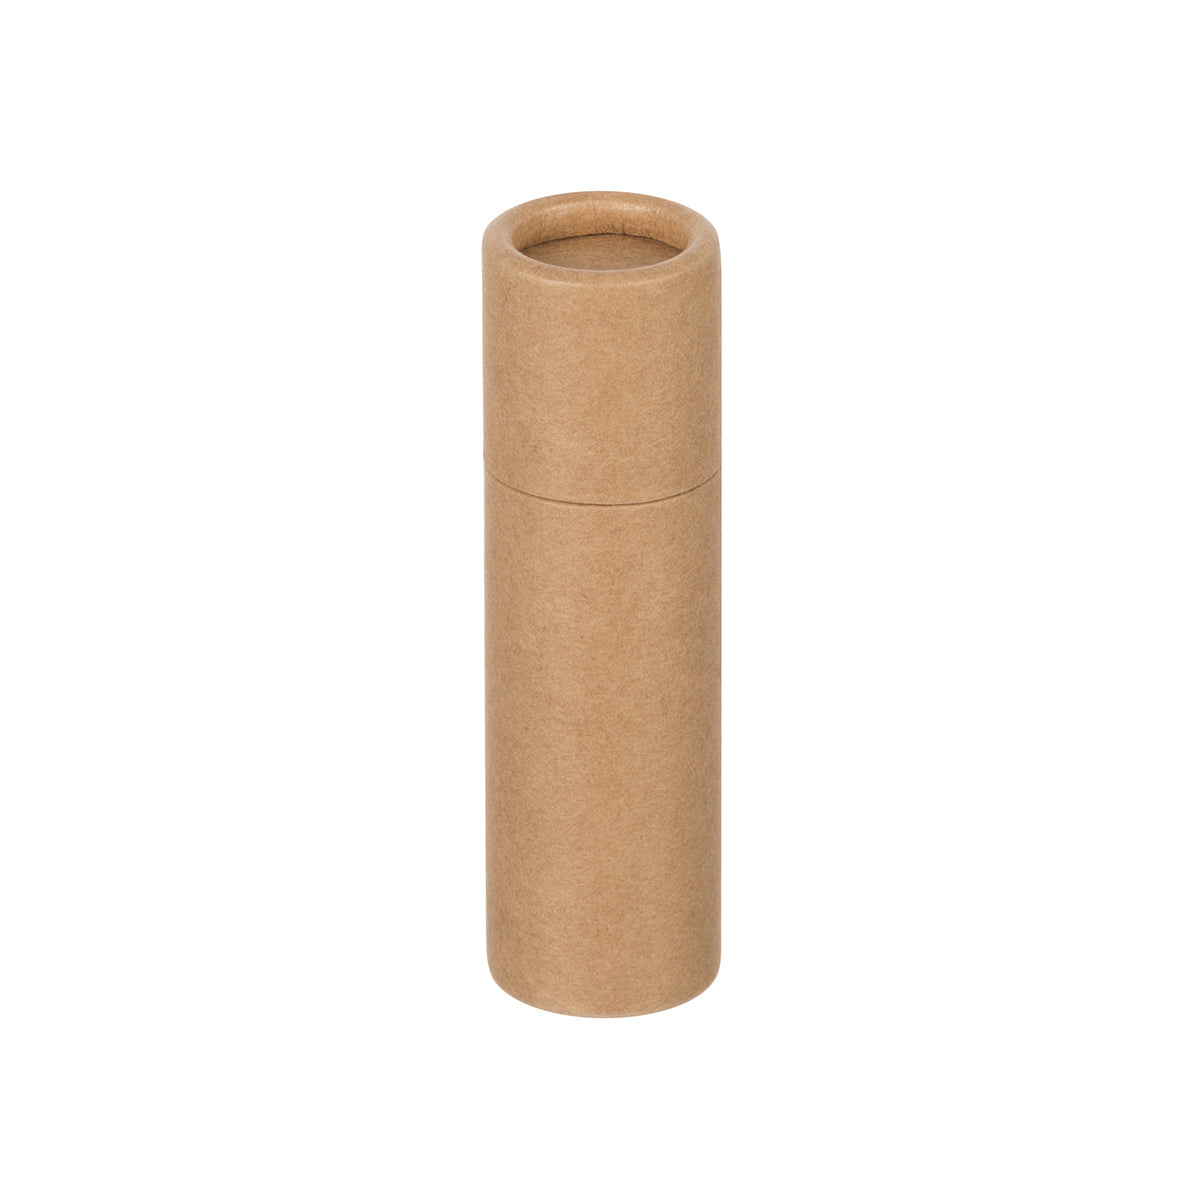 Cardboard Lip Balm Tube - Kraft 10ml